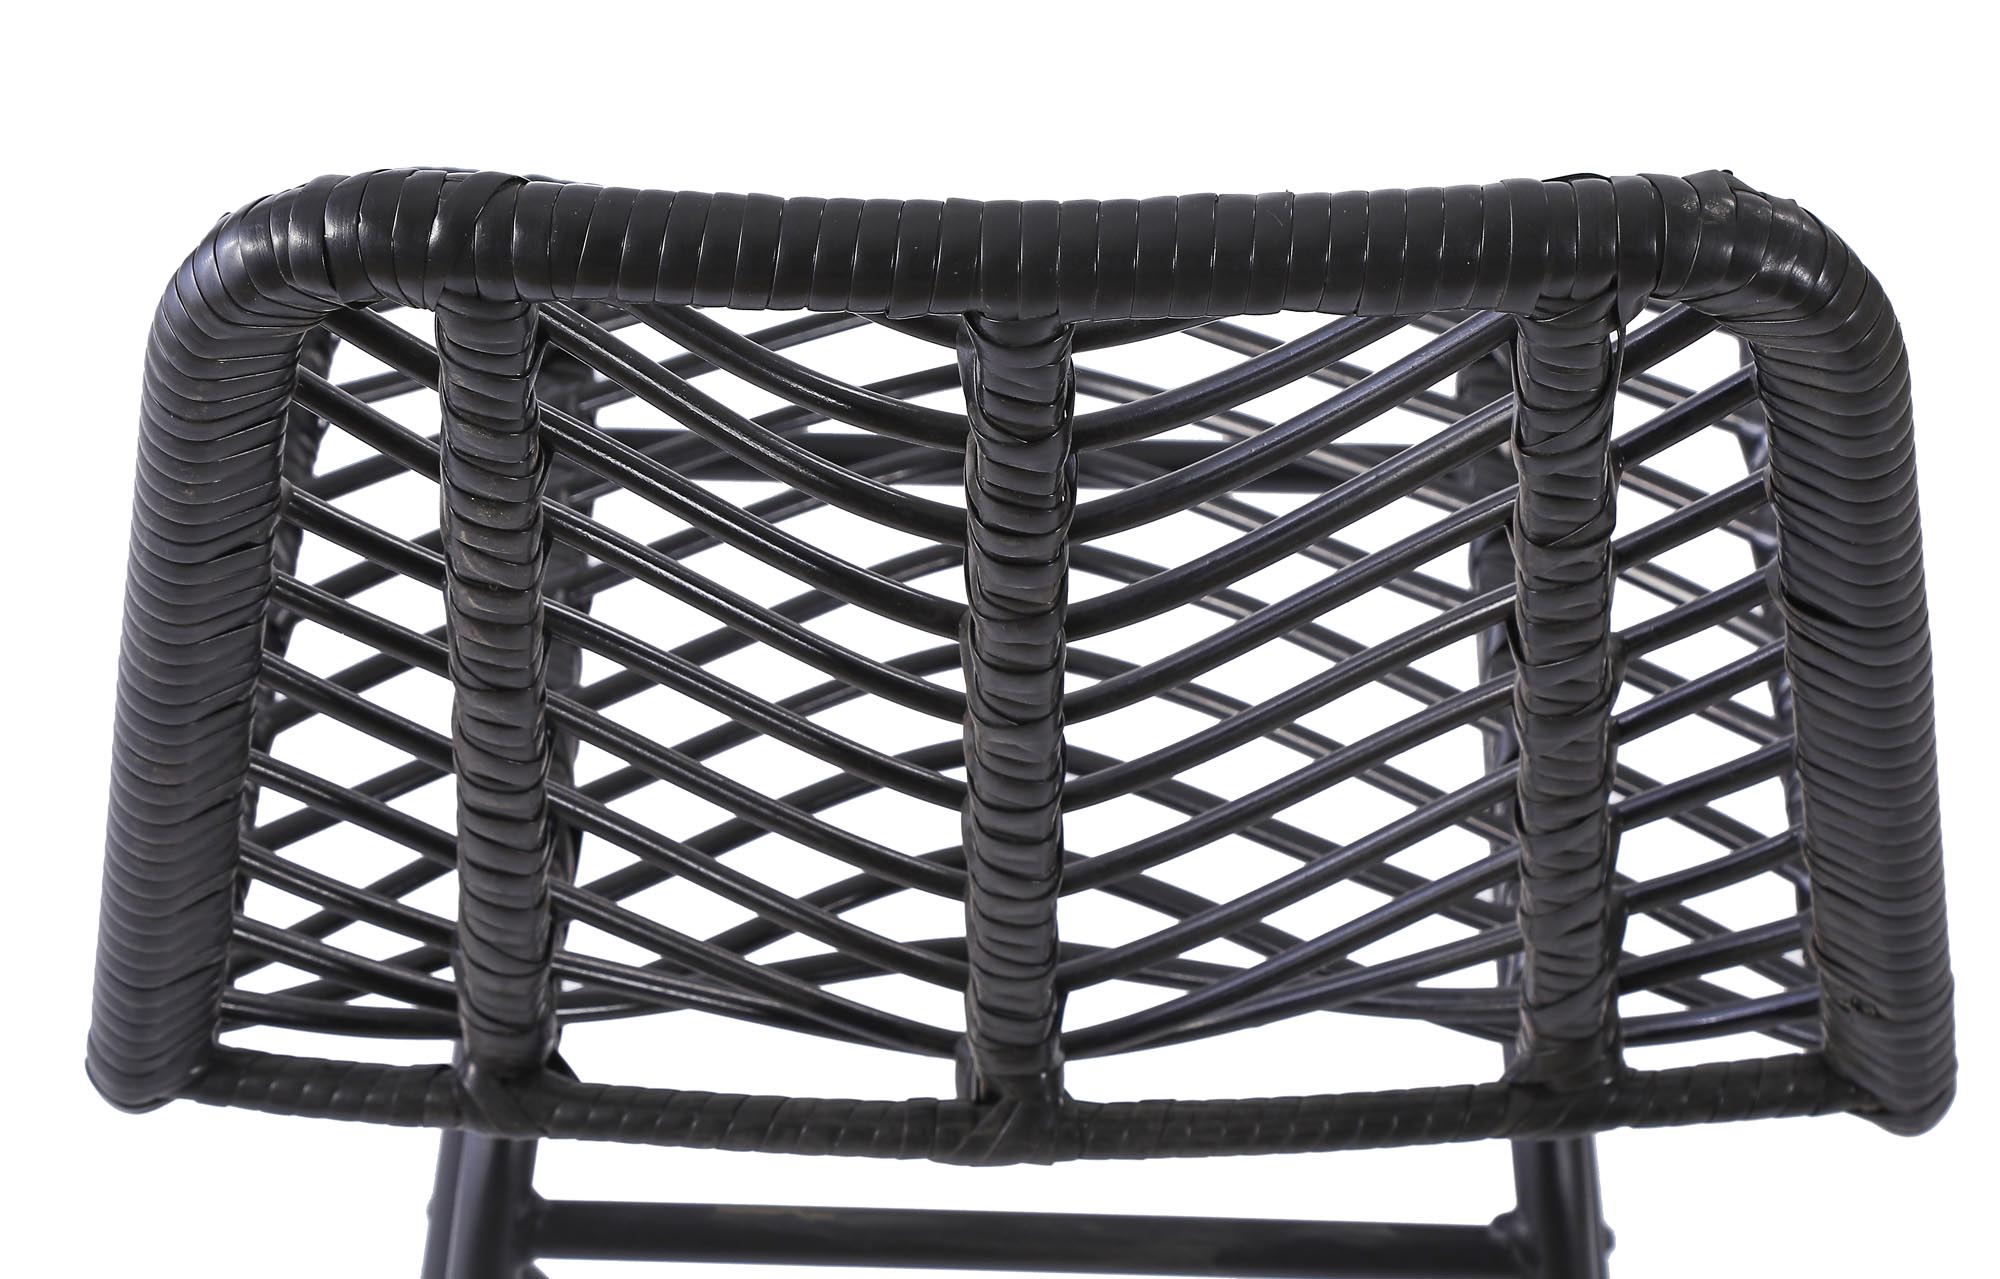 H97 bárszék - fekete  h97 Barová židle Fekete